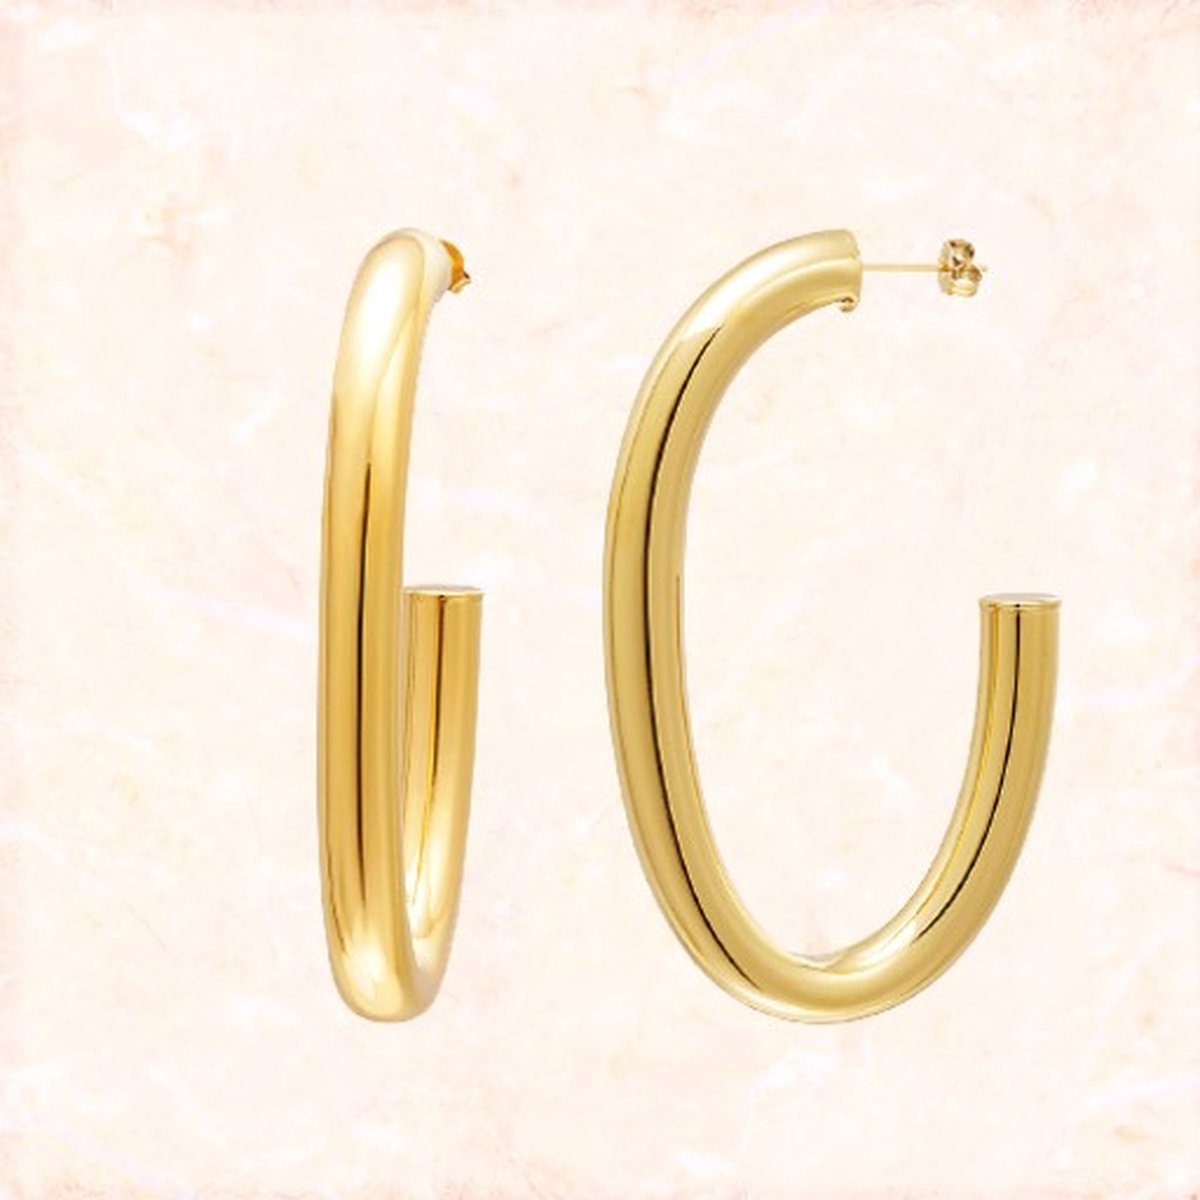 Jobo by Jet - Cheerful earrings – Goud - Dames oorbellen - Prachtige waterproef oorbellen - Ringen